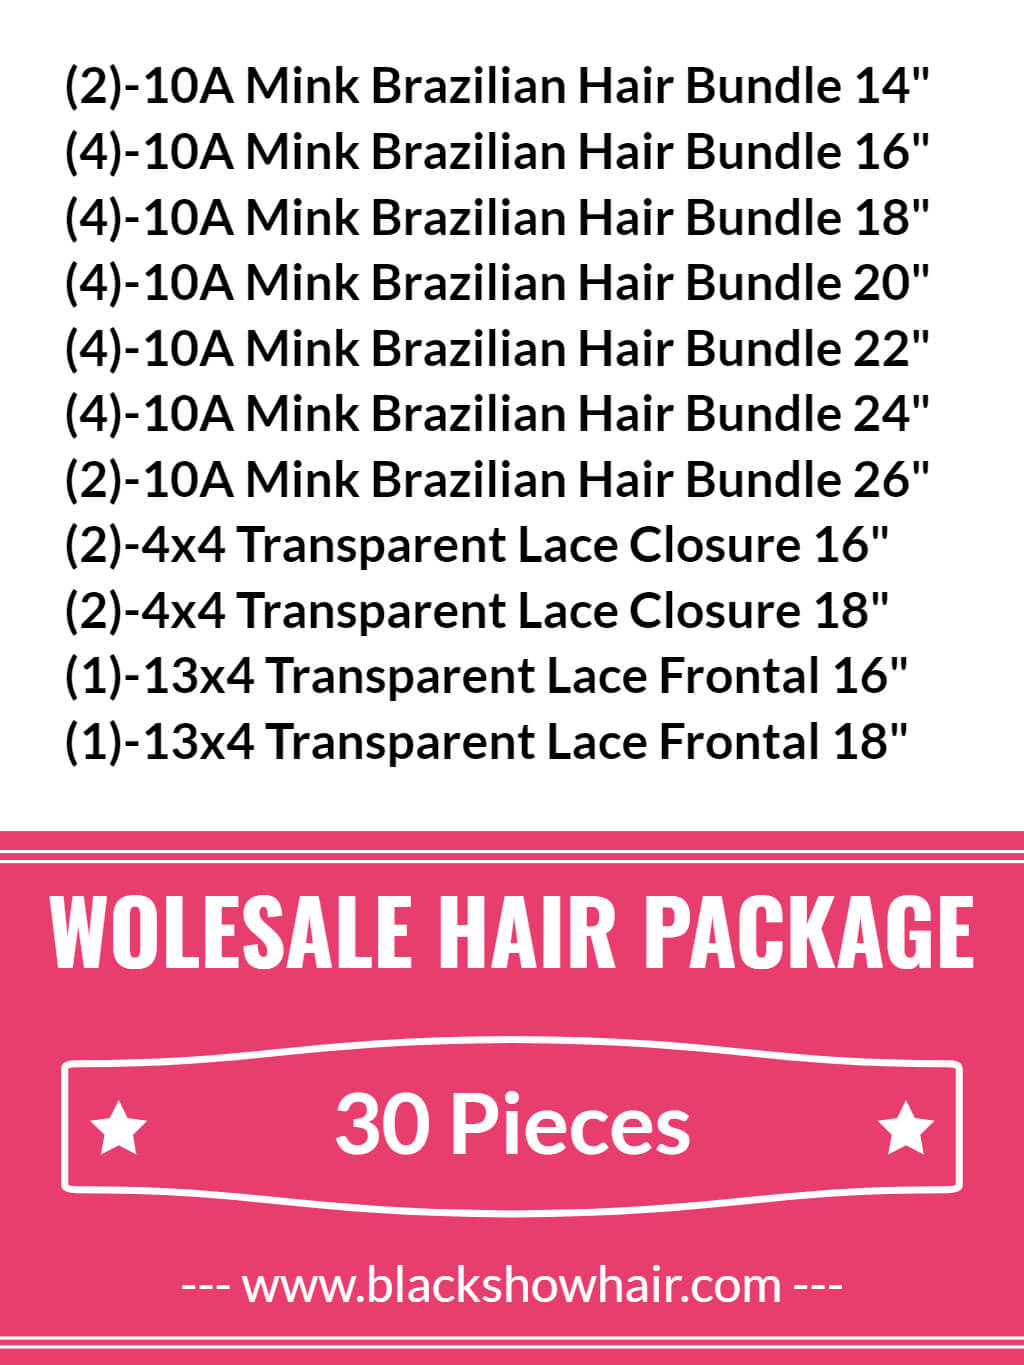 mink brazilian hair wholesale hair bundles bulk 30 pieces